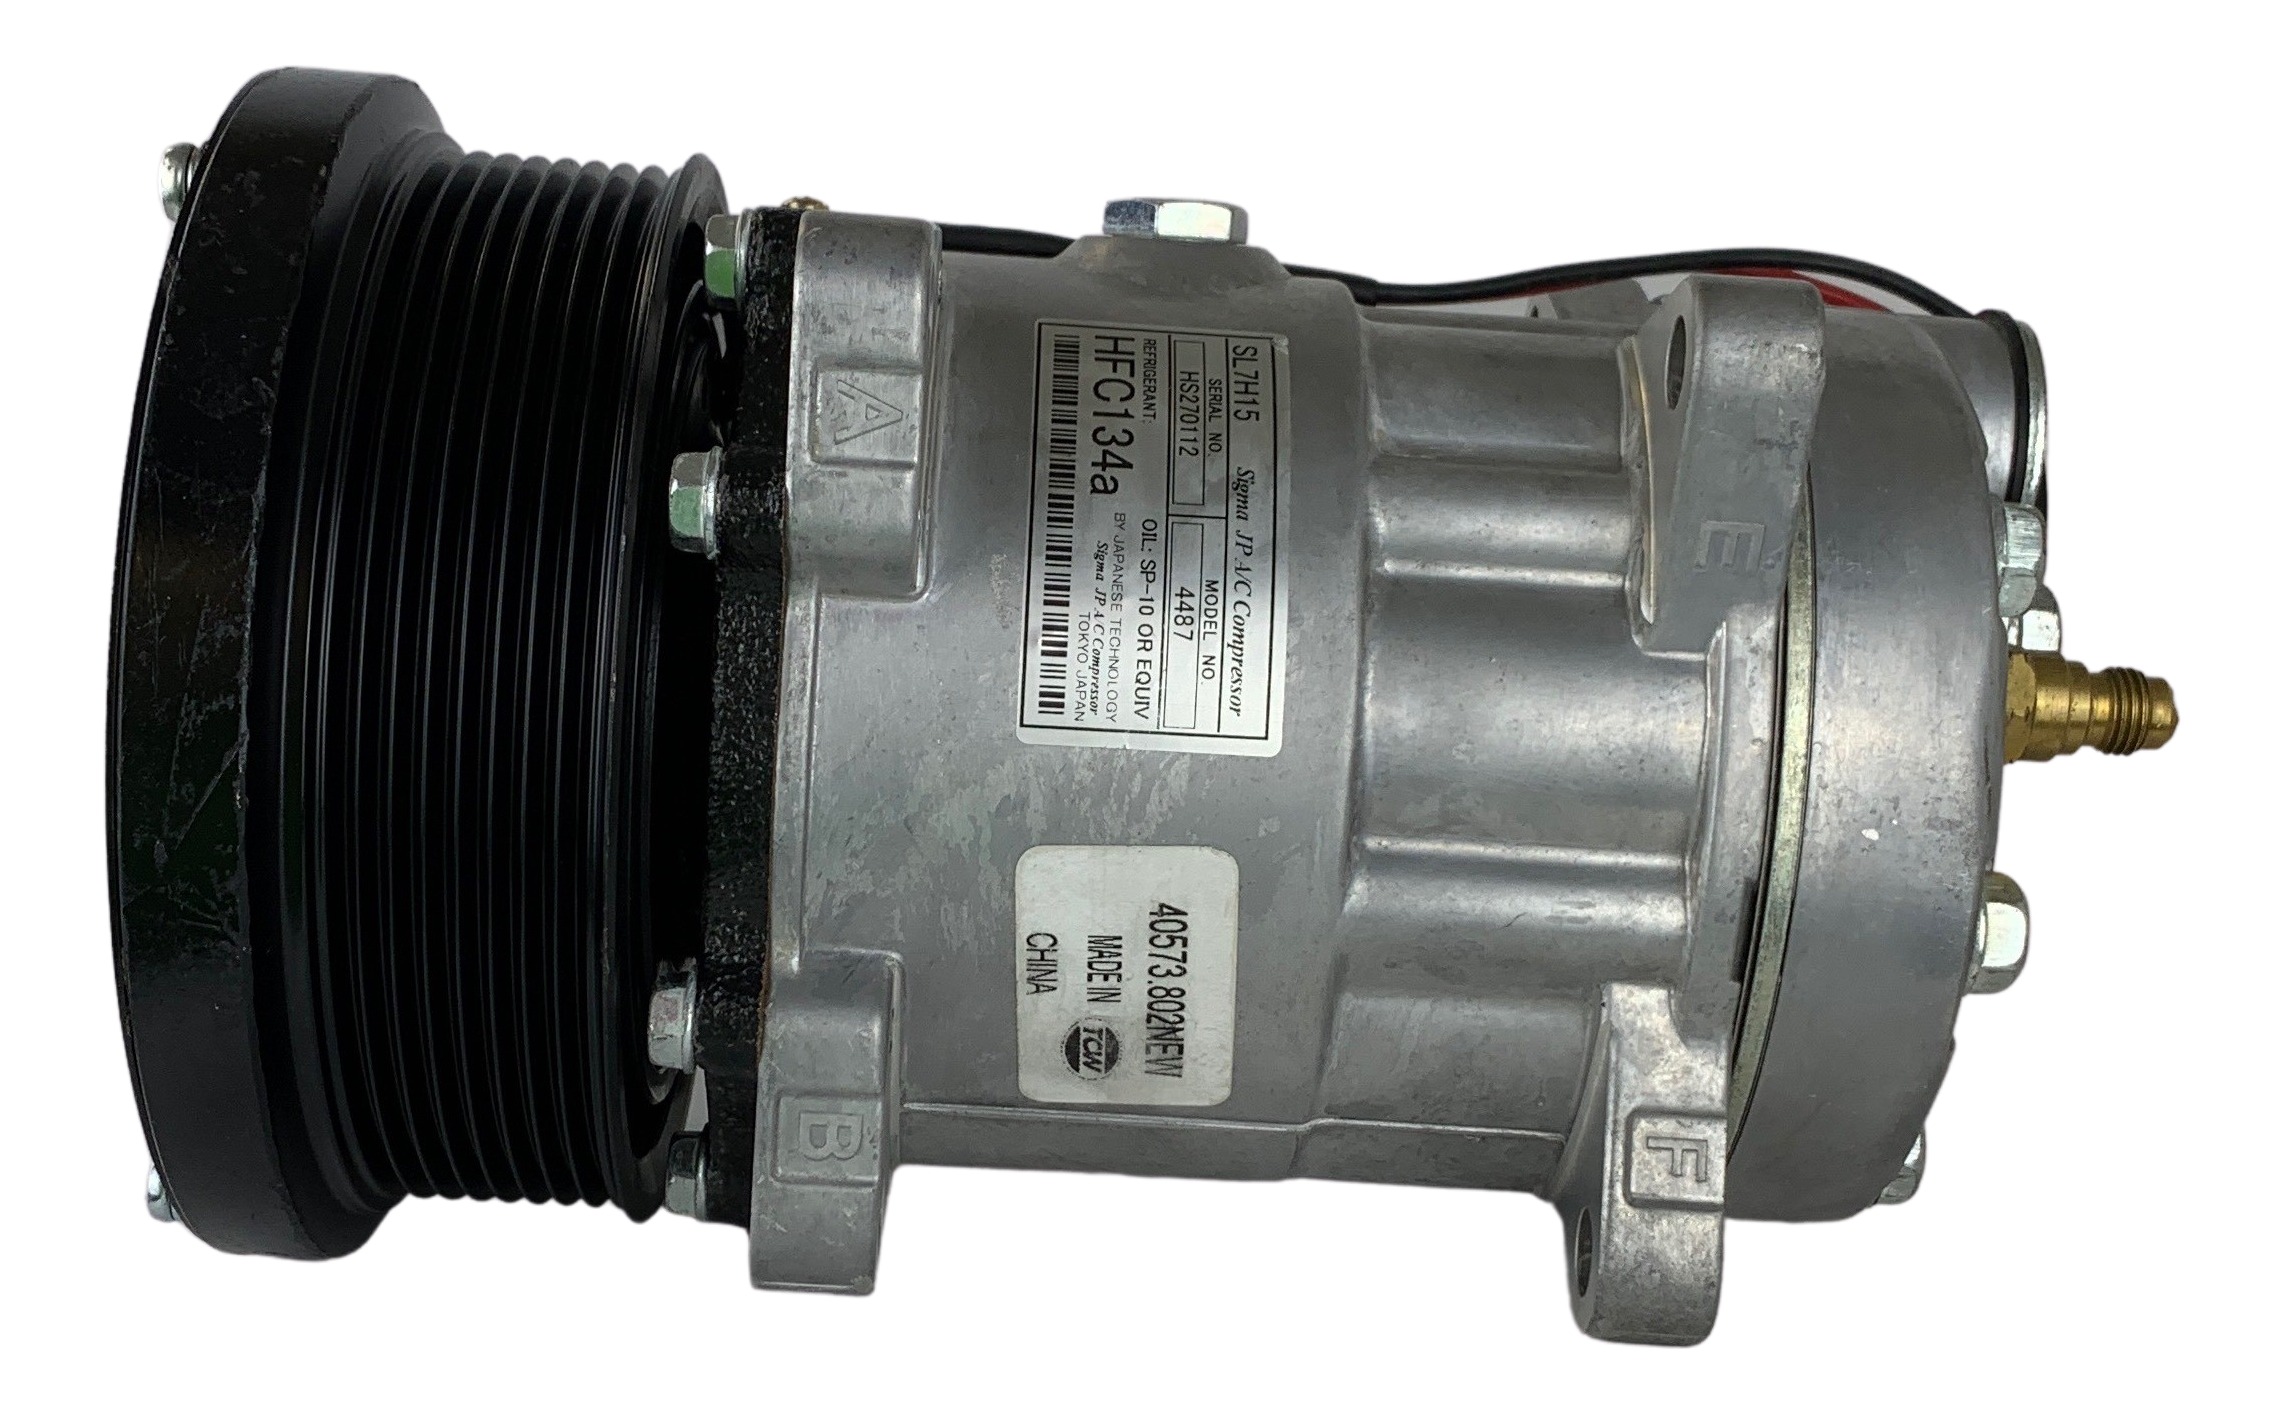 TCW Compressor 40573.802 Remanufactured Product Image field_60b6a13a6e67c